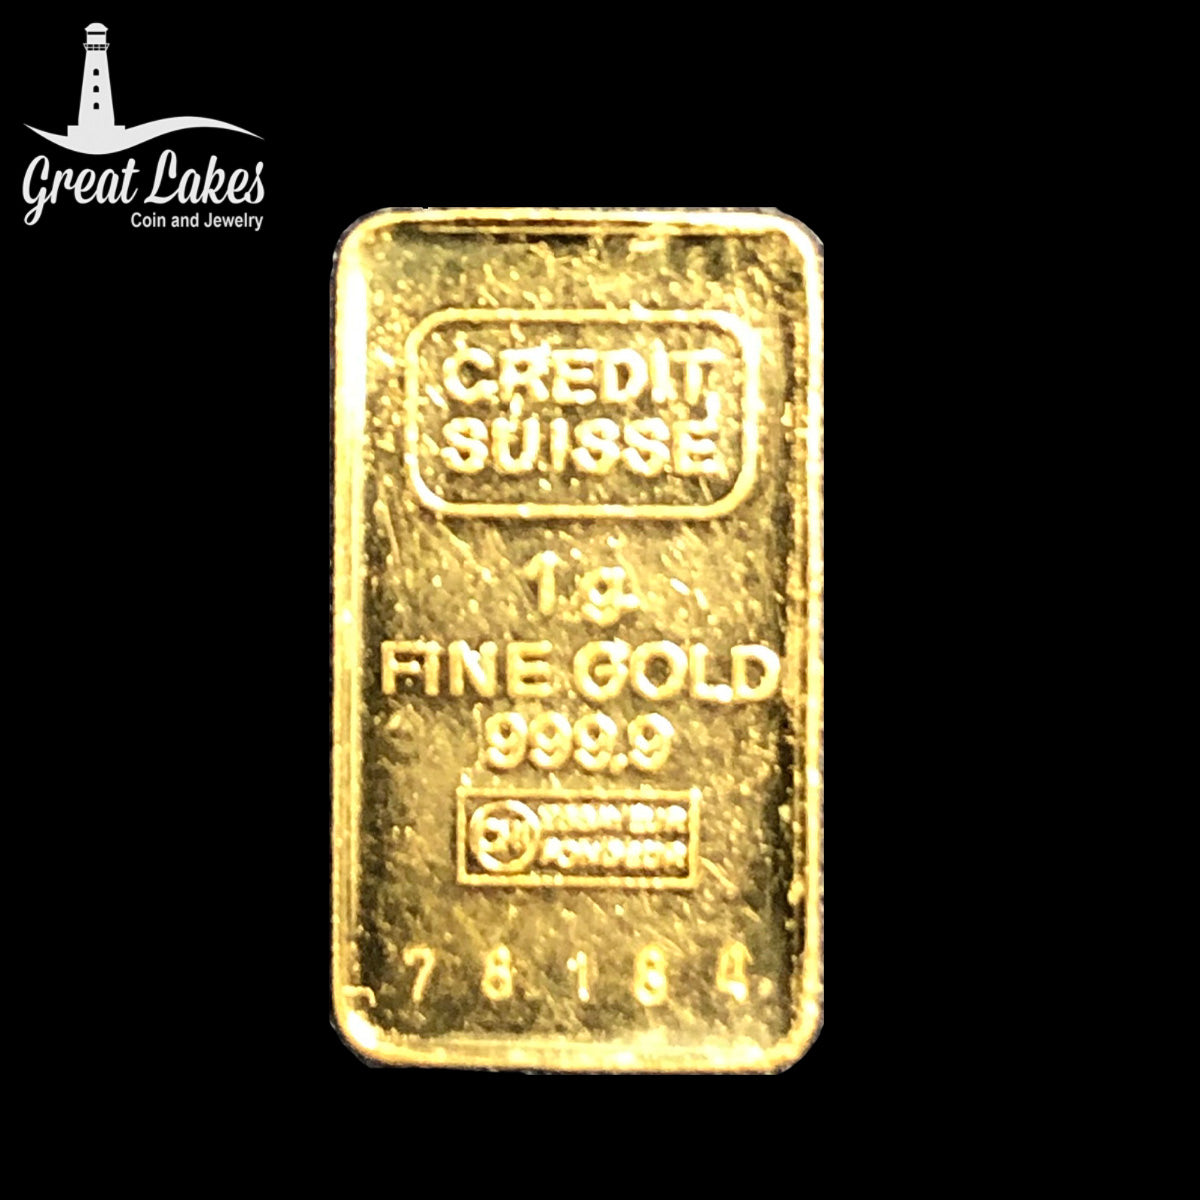 Credit Suisse 1 g Gold Bar (Low Premium)